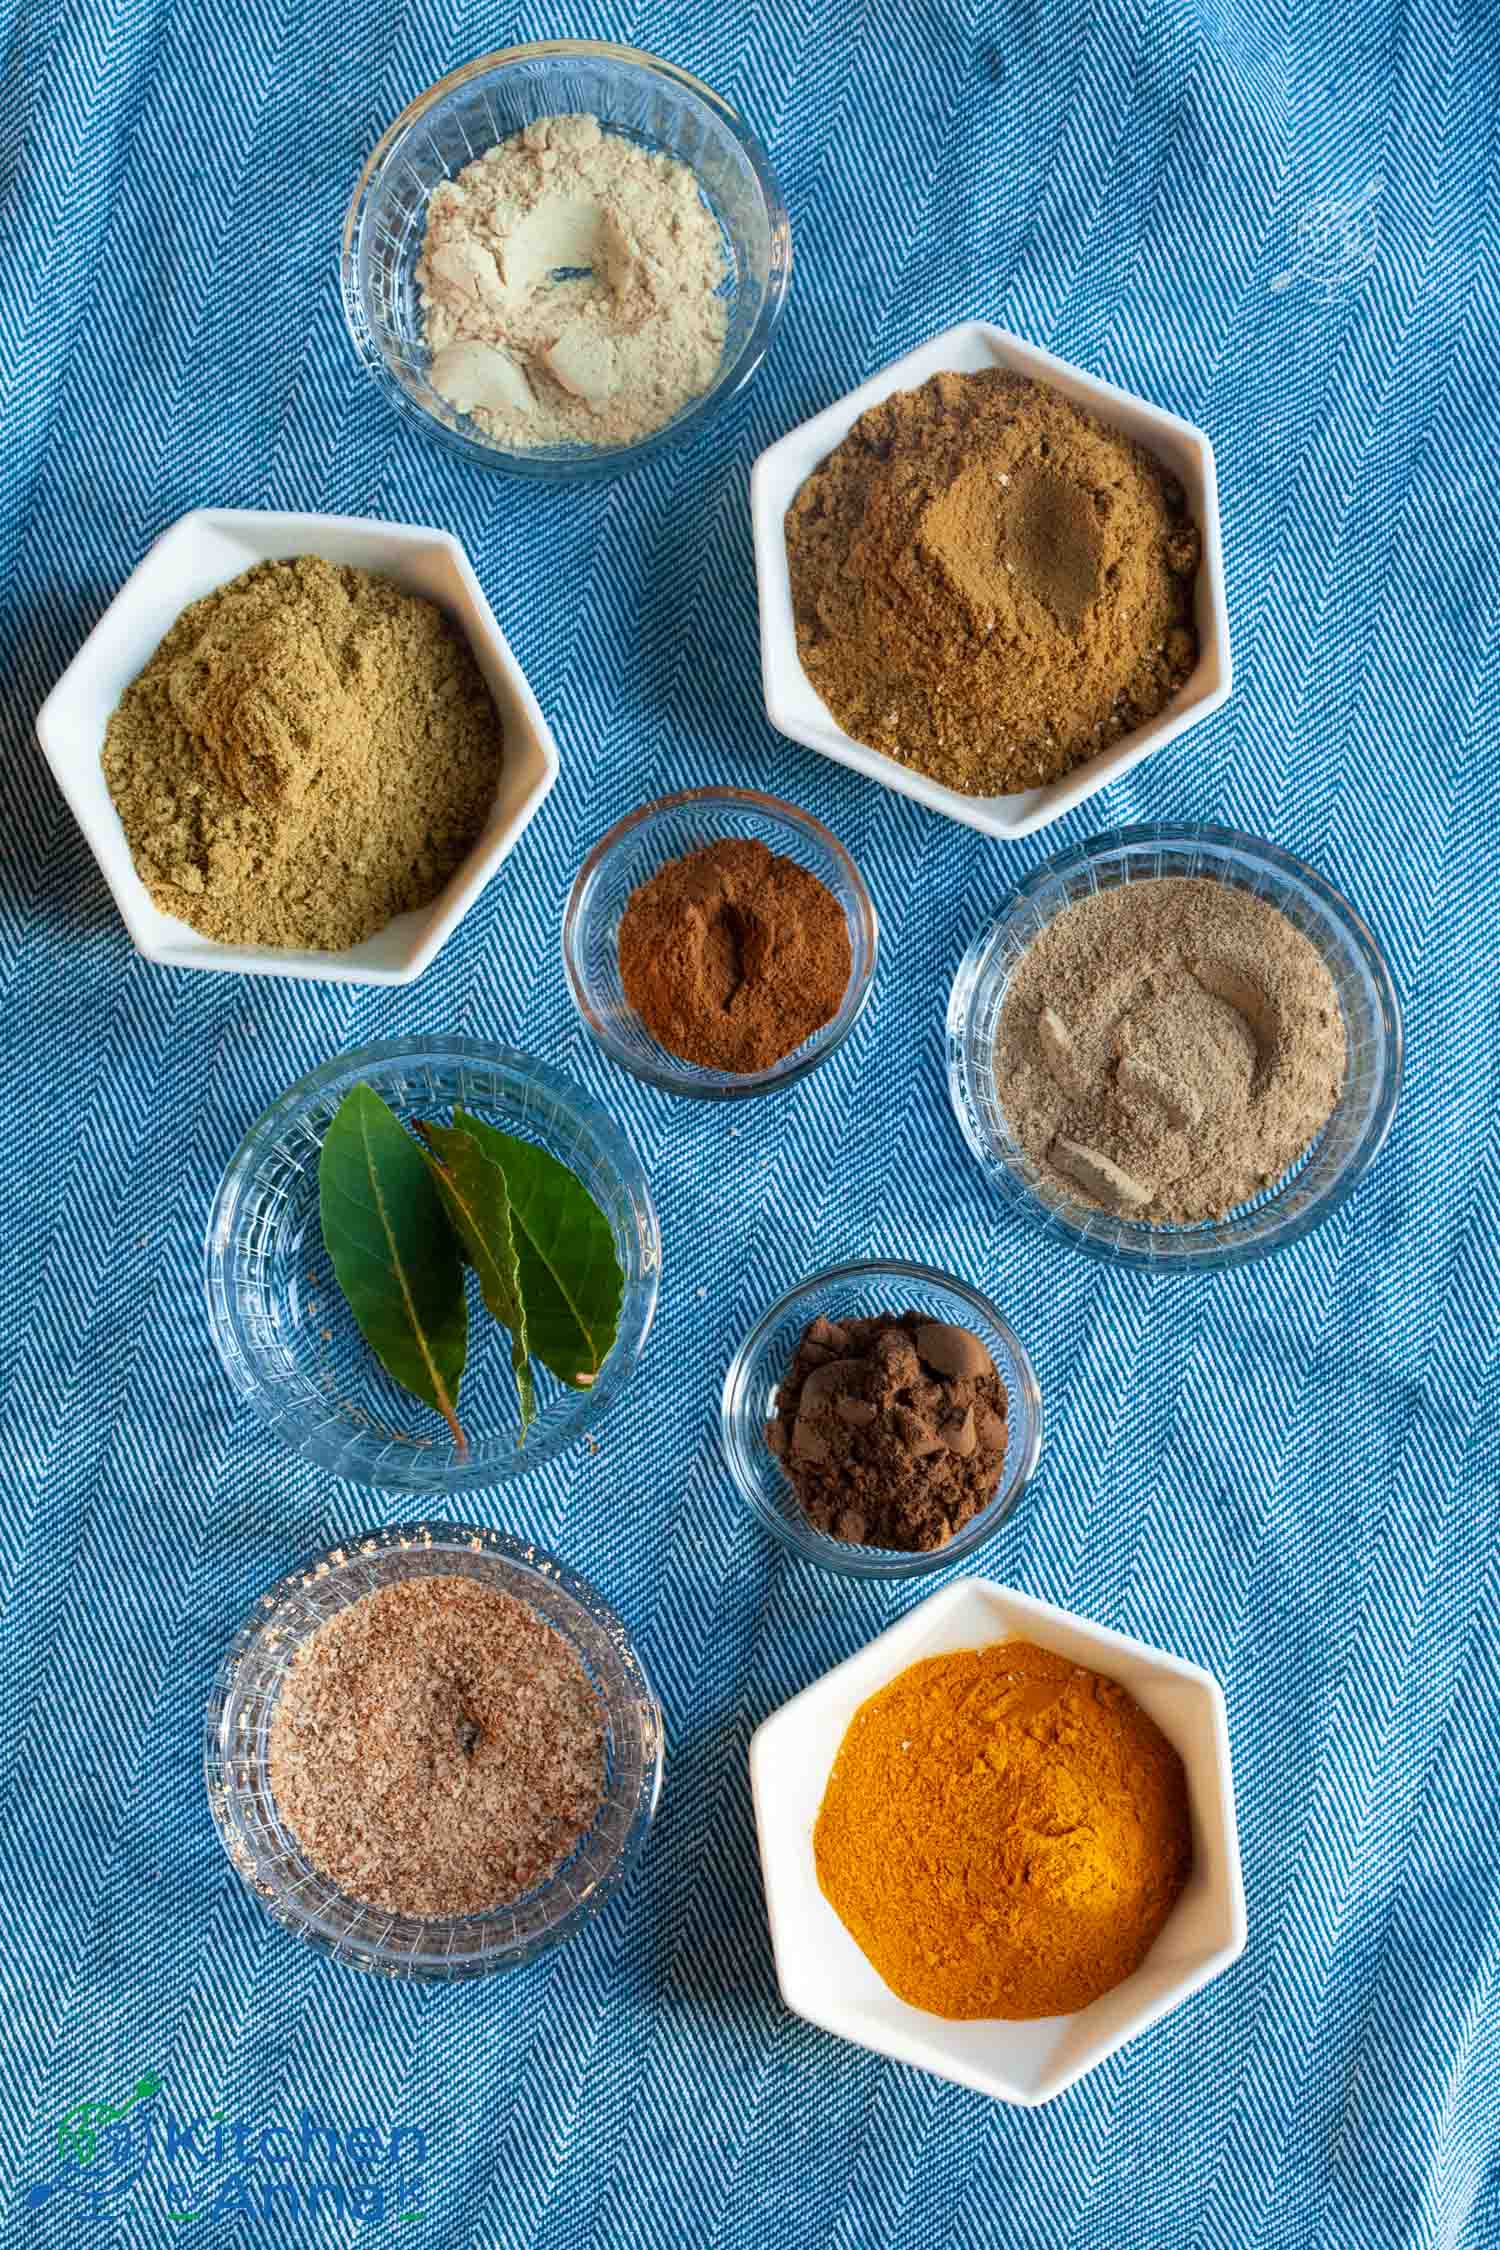 Japanese curry powder